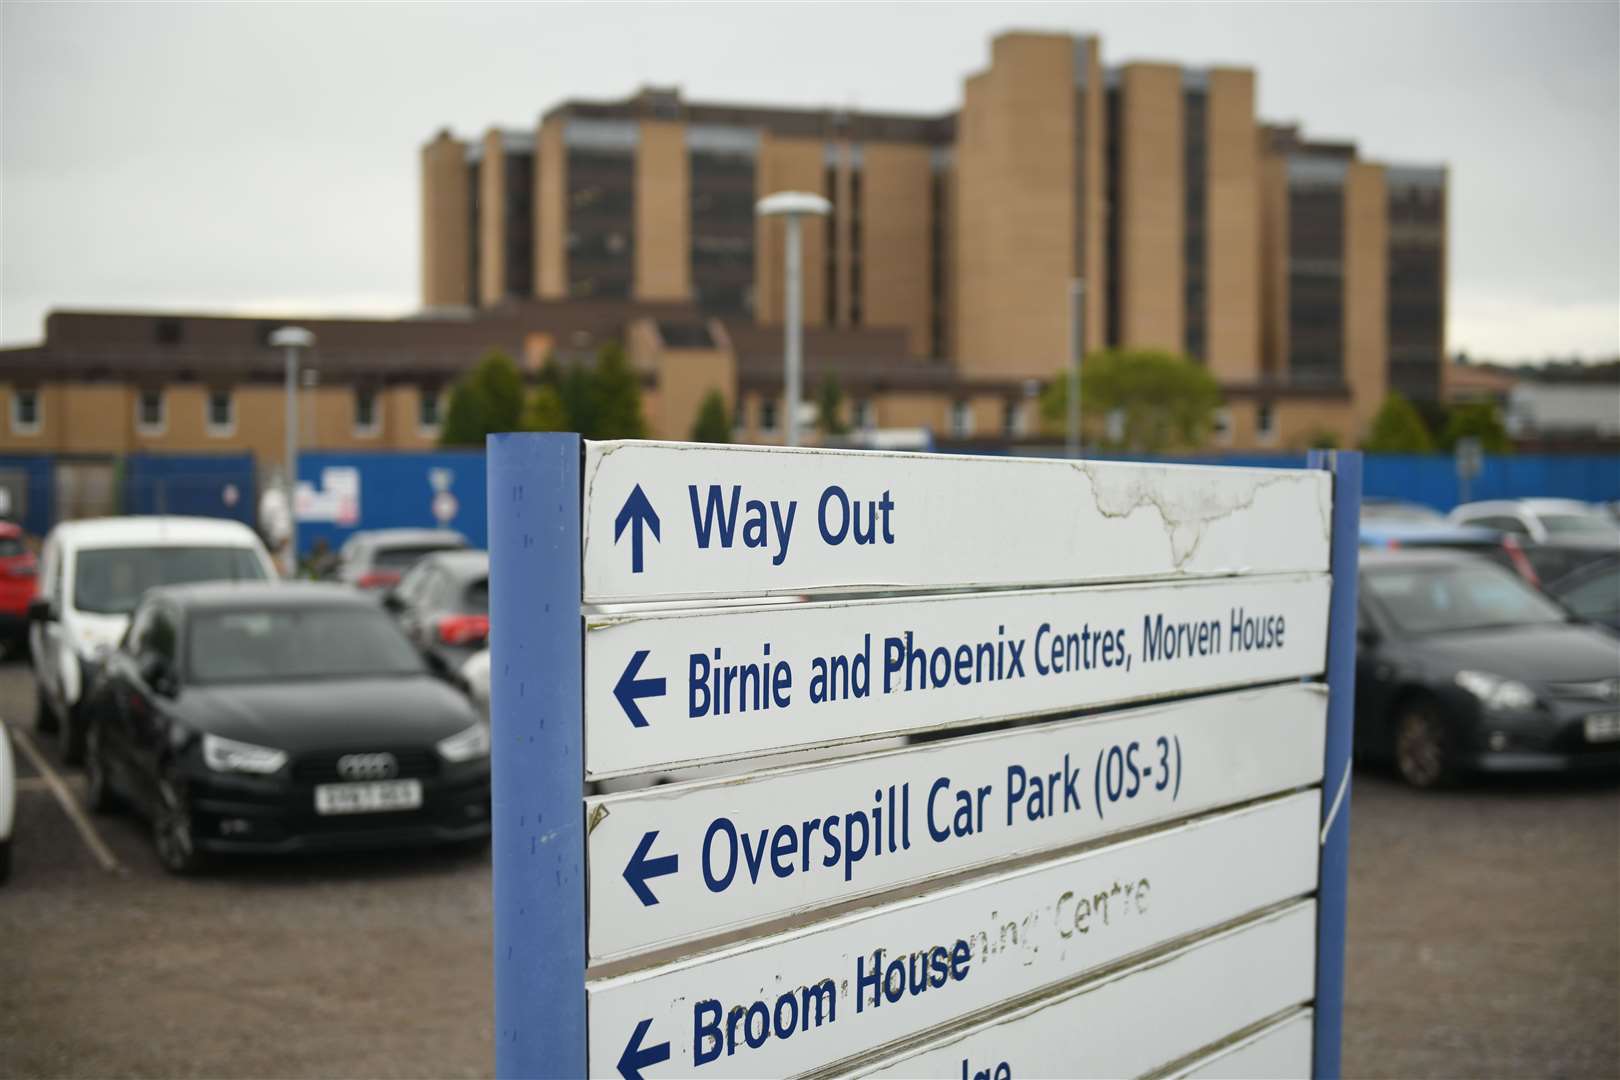 Raigmore Hospital overspill car park locator. Picture: James Mackenzie.